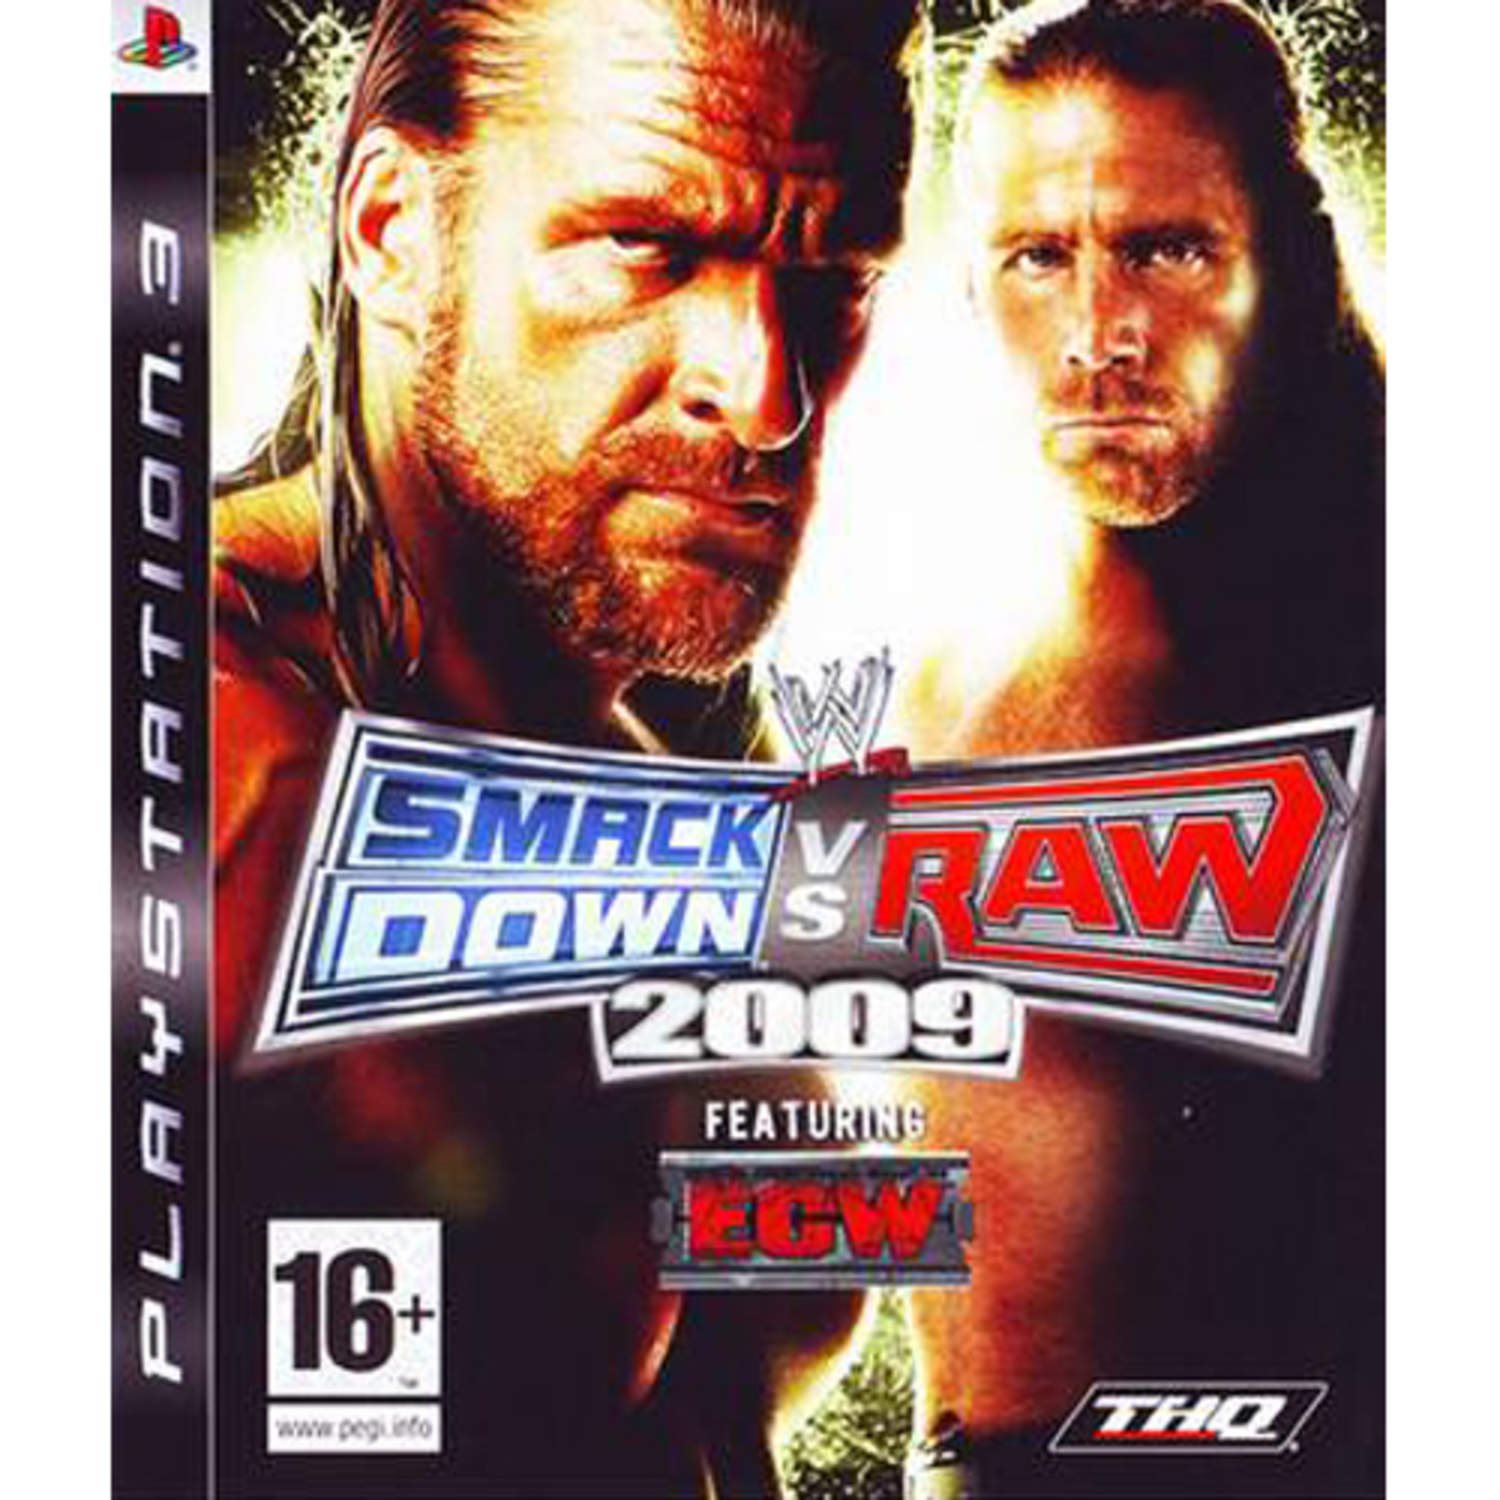 Smack Down VS Raw 2009 featuring ECW Steelbook